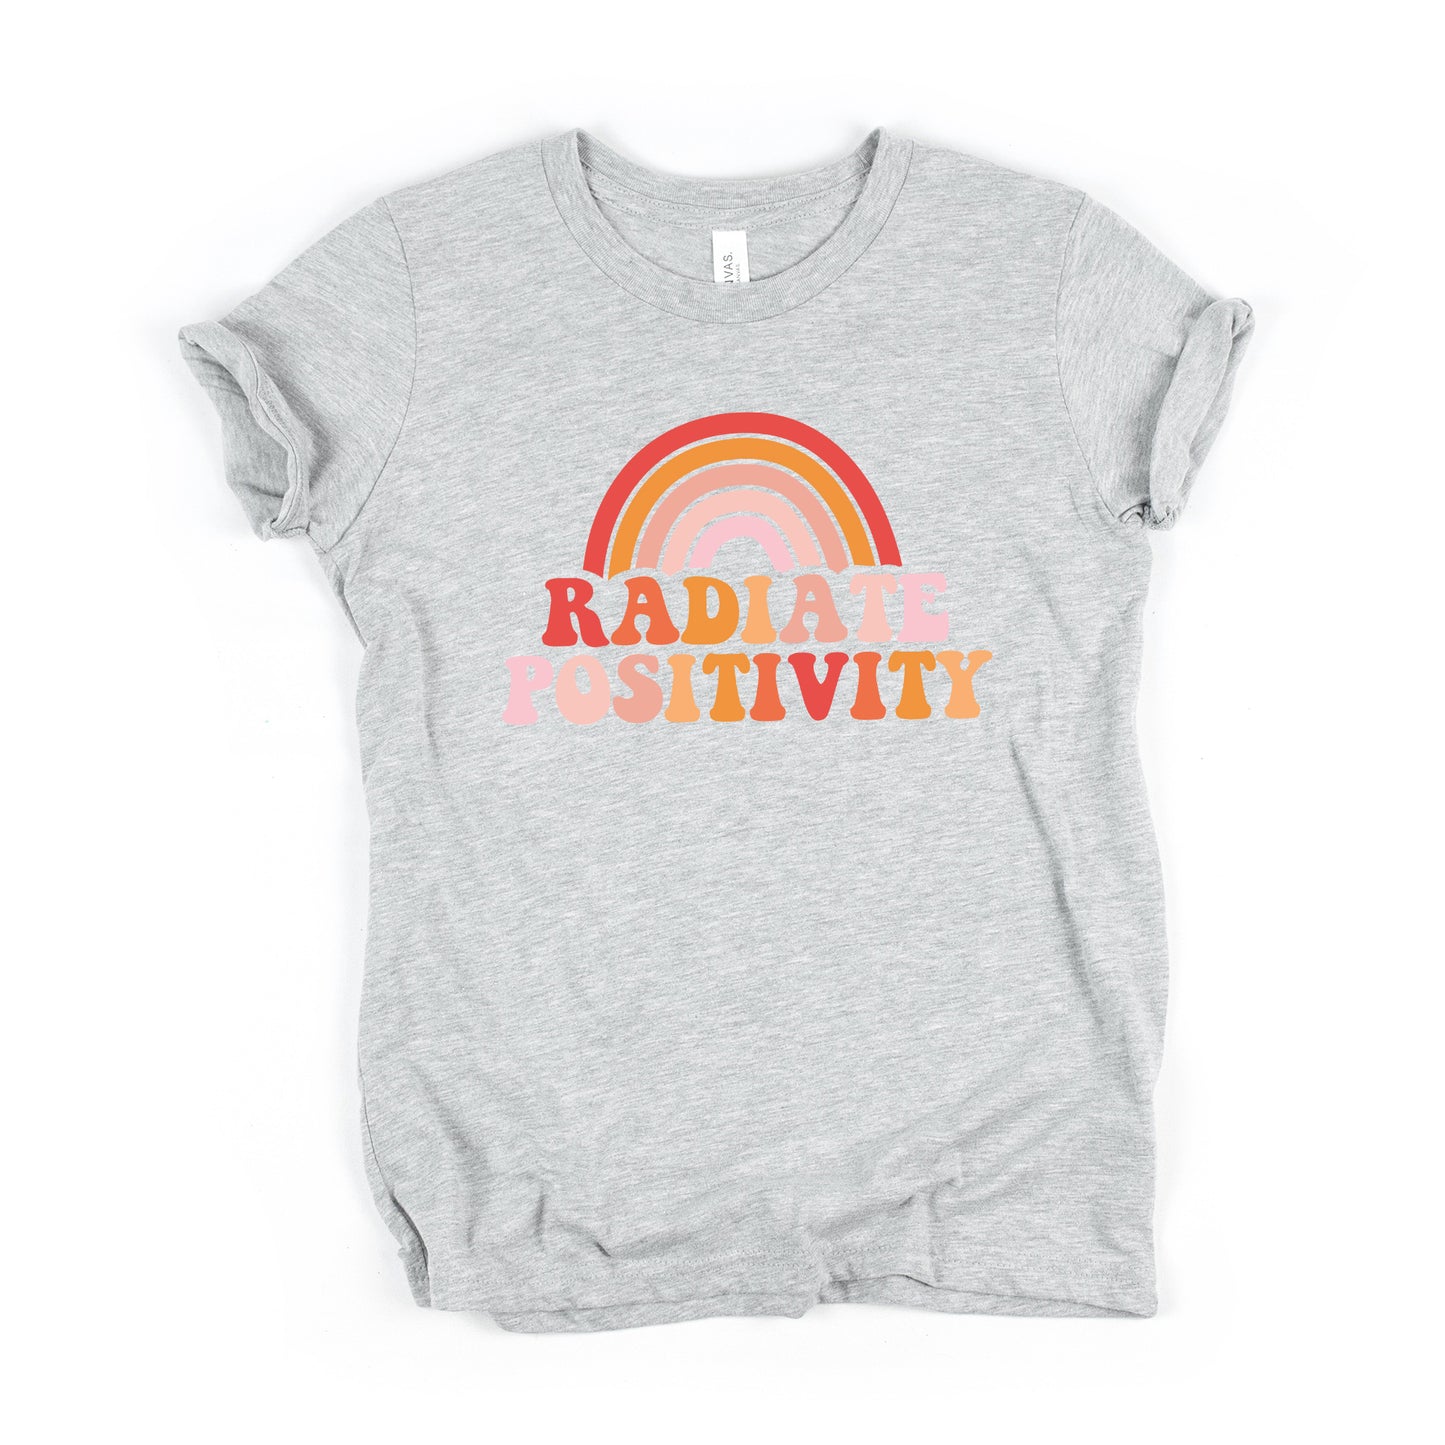 Radiate Positivity | Youth Short Sleeve Crew Neck